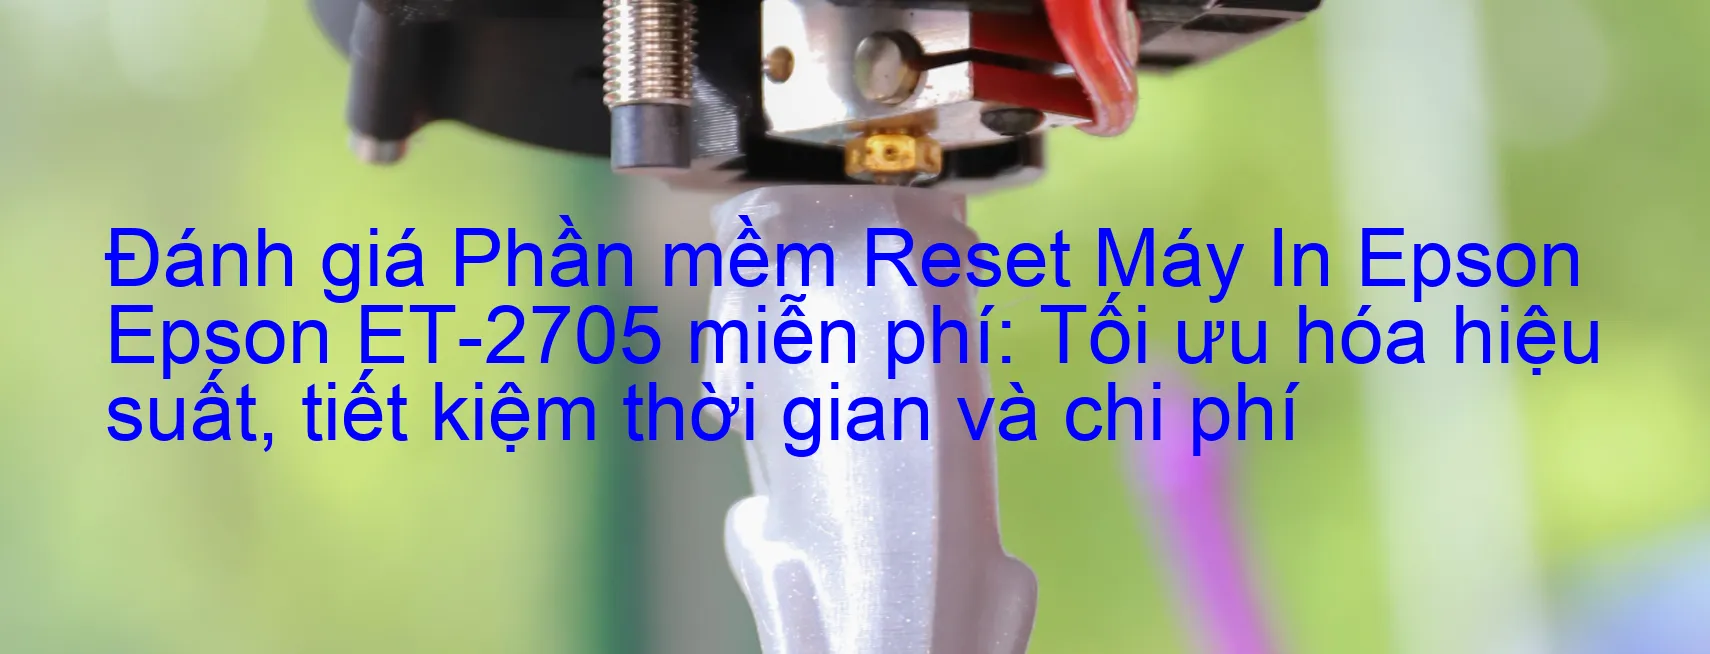 Đánh Giá phần mềm Reset Epson ET-2705 Miễn Phí